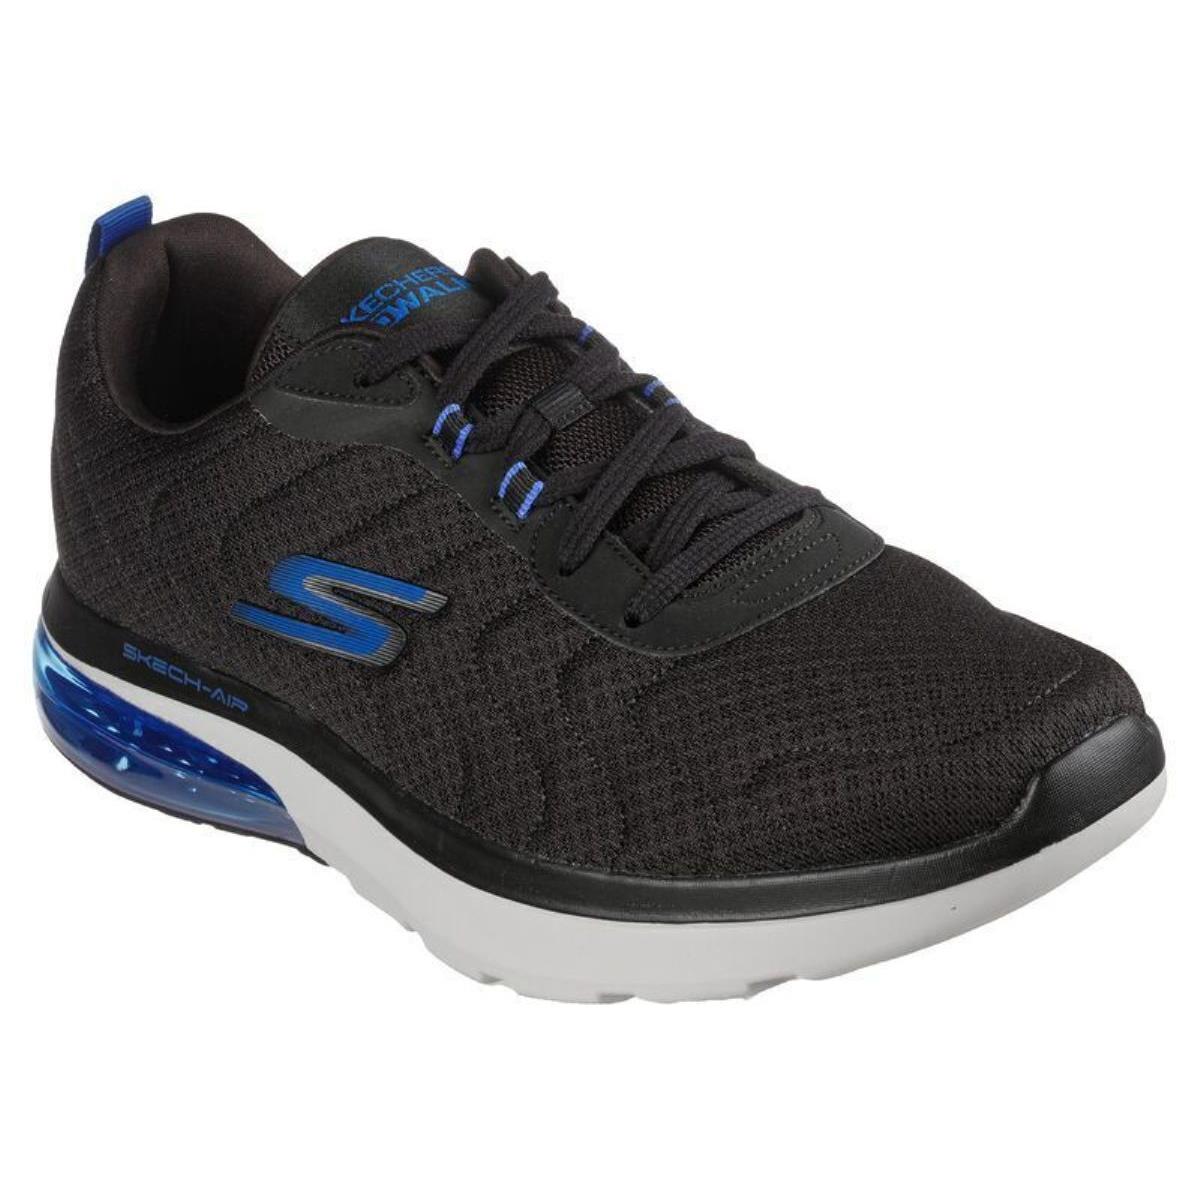 Man Skechers Go Walk Air 2.0 Trainers Shoe Lace Up 216154 Black/blue